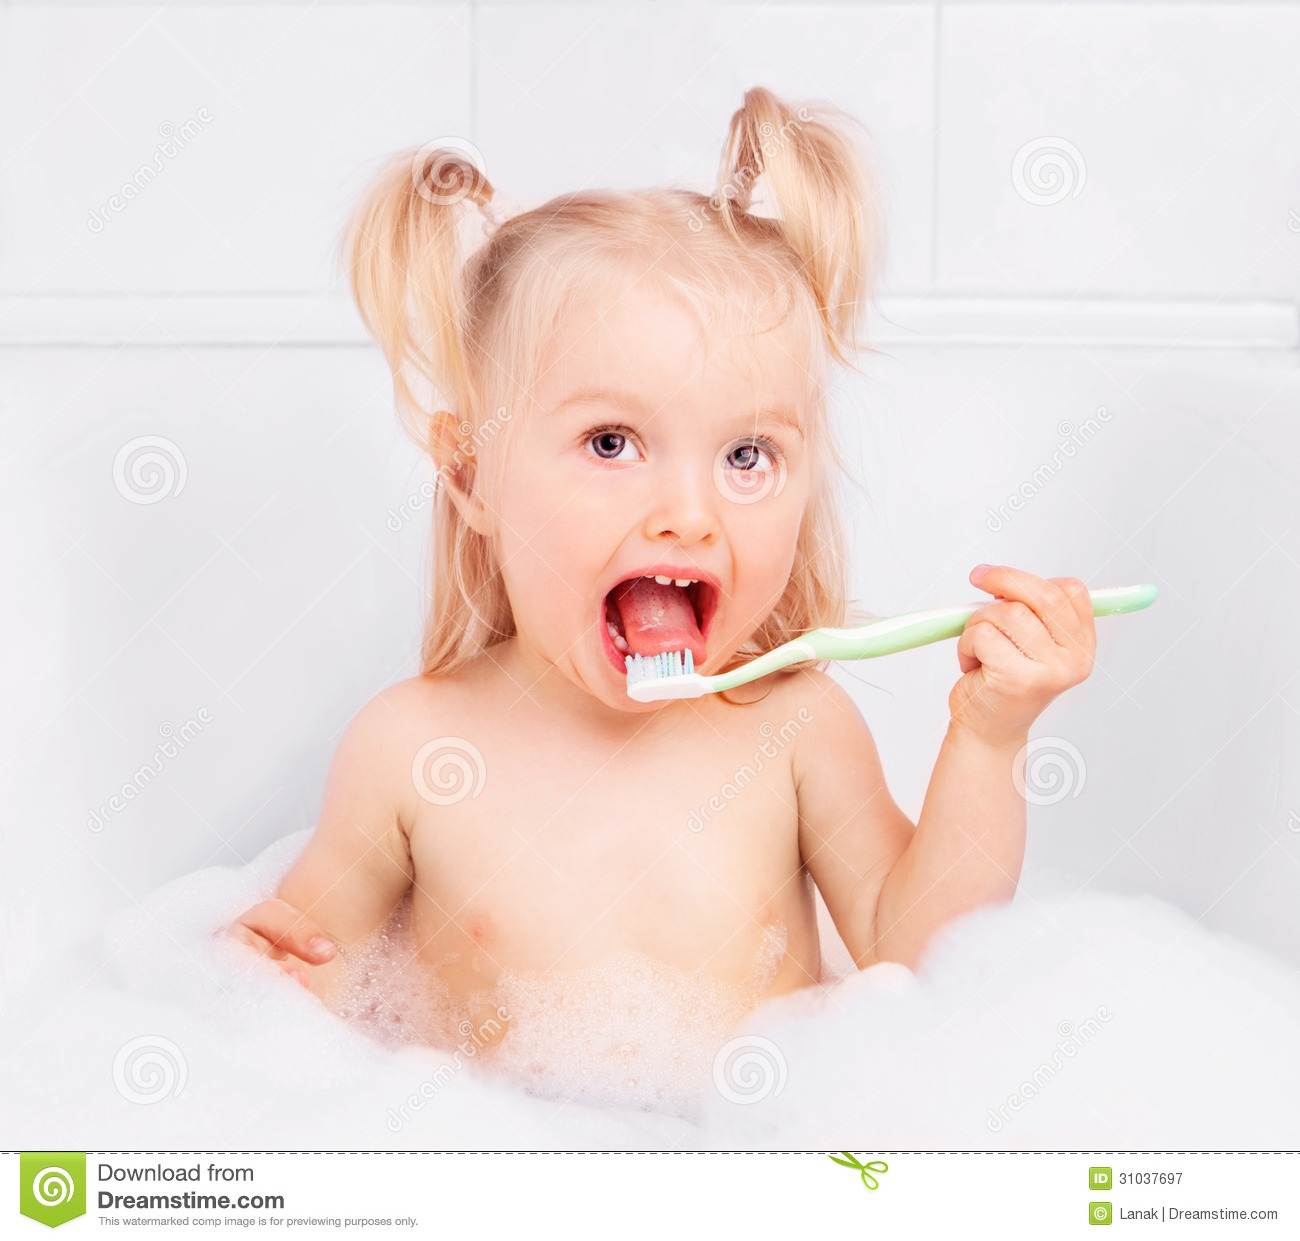 Baby Brushing Teeth Royalty Free Stock Photography   Image  31037697